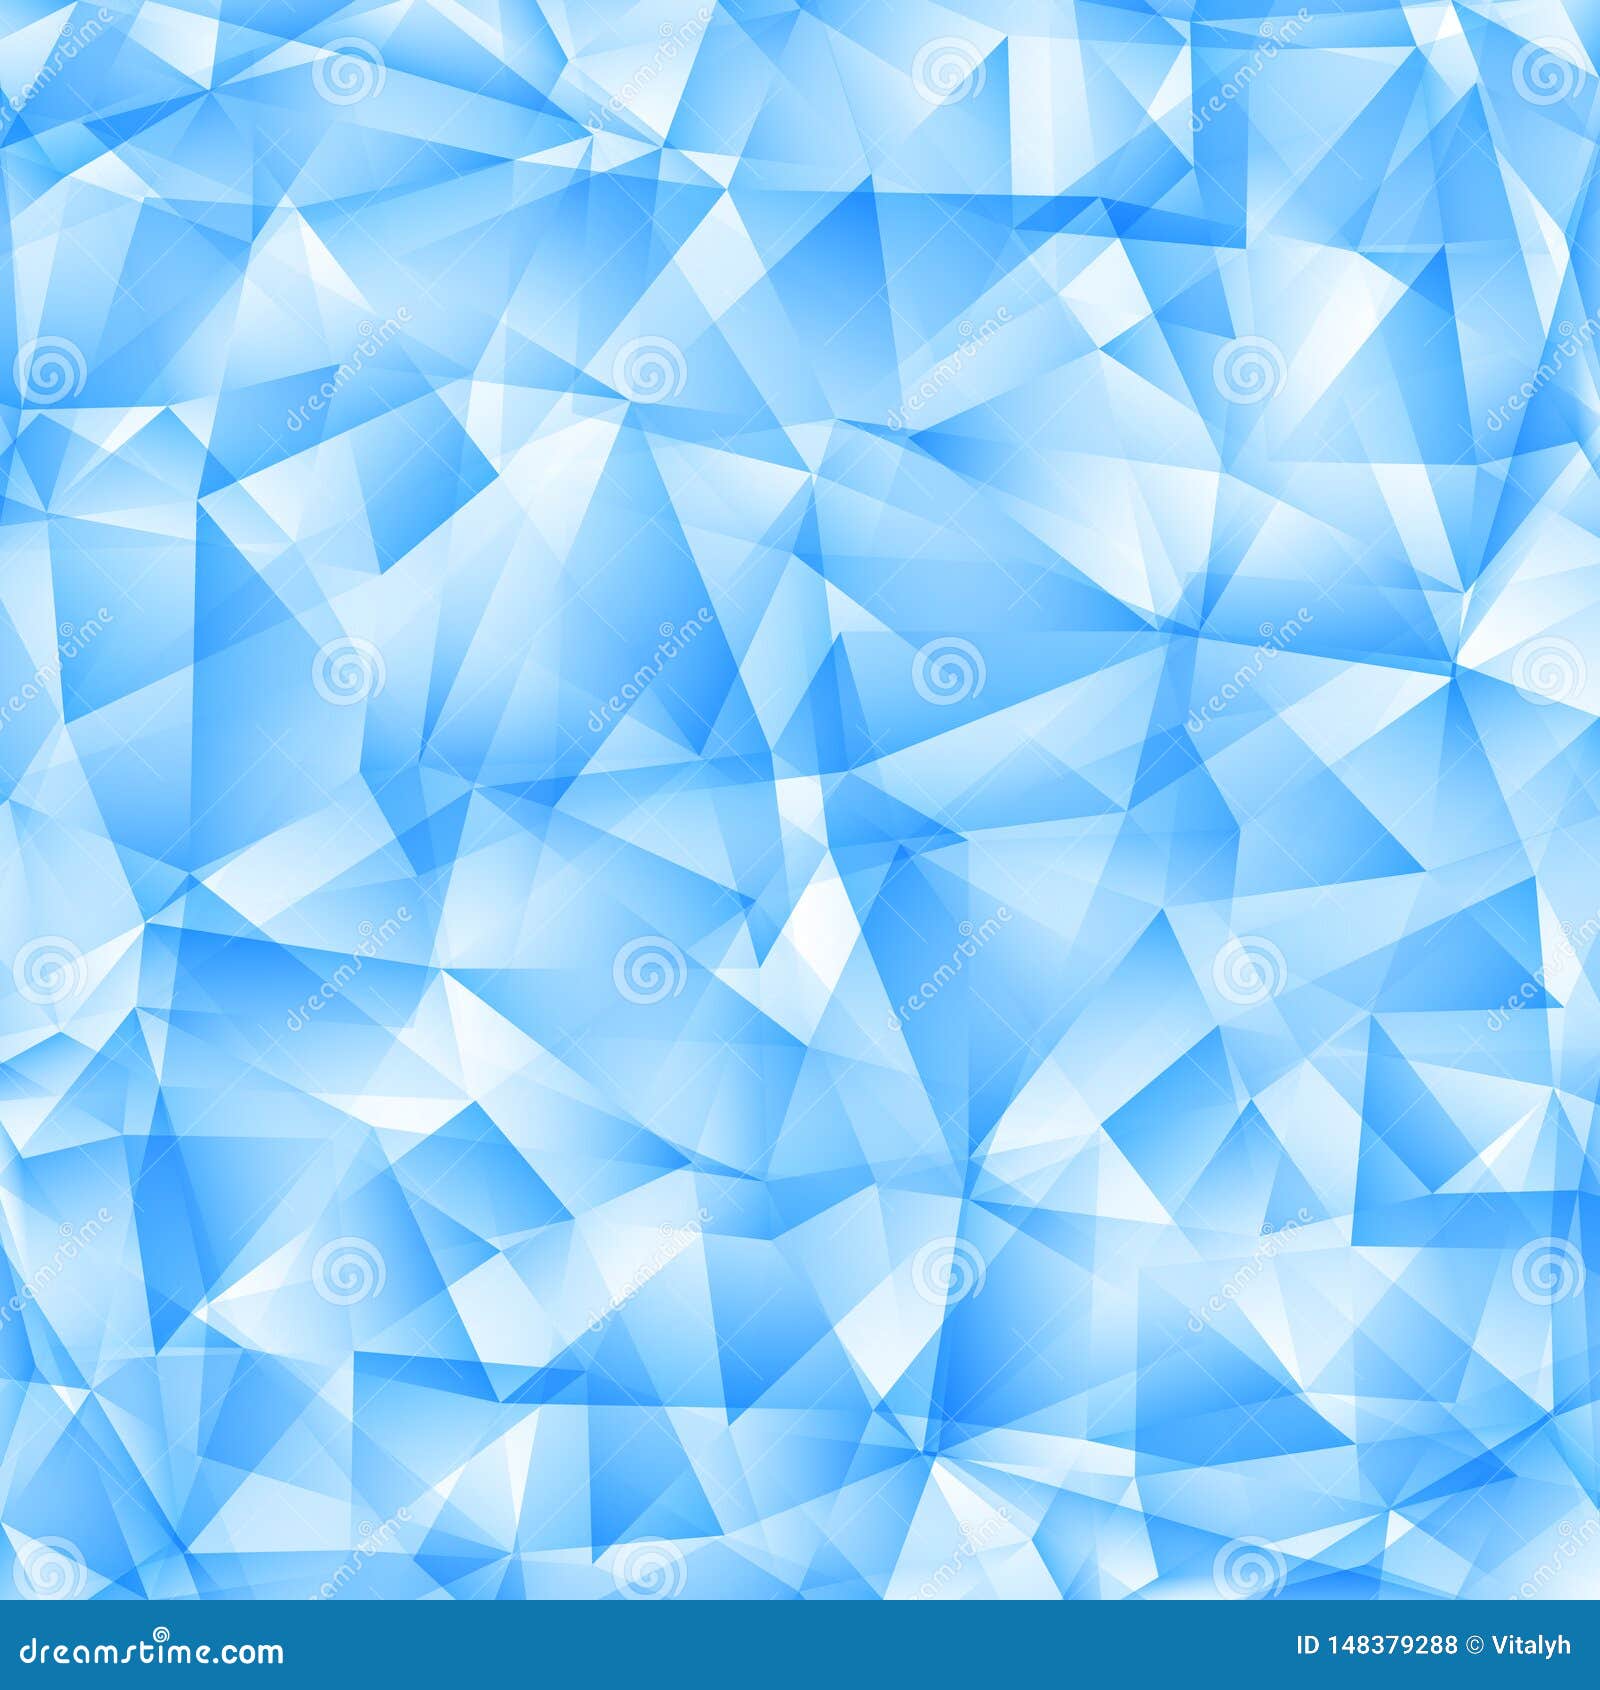 Vector Abstract Light Blue Diamond Polygonal Background Illustration Stock  Vector - Illustration of crystal, energy: 148379288